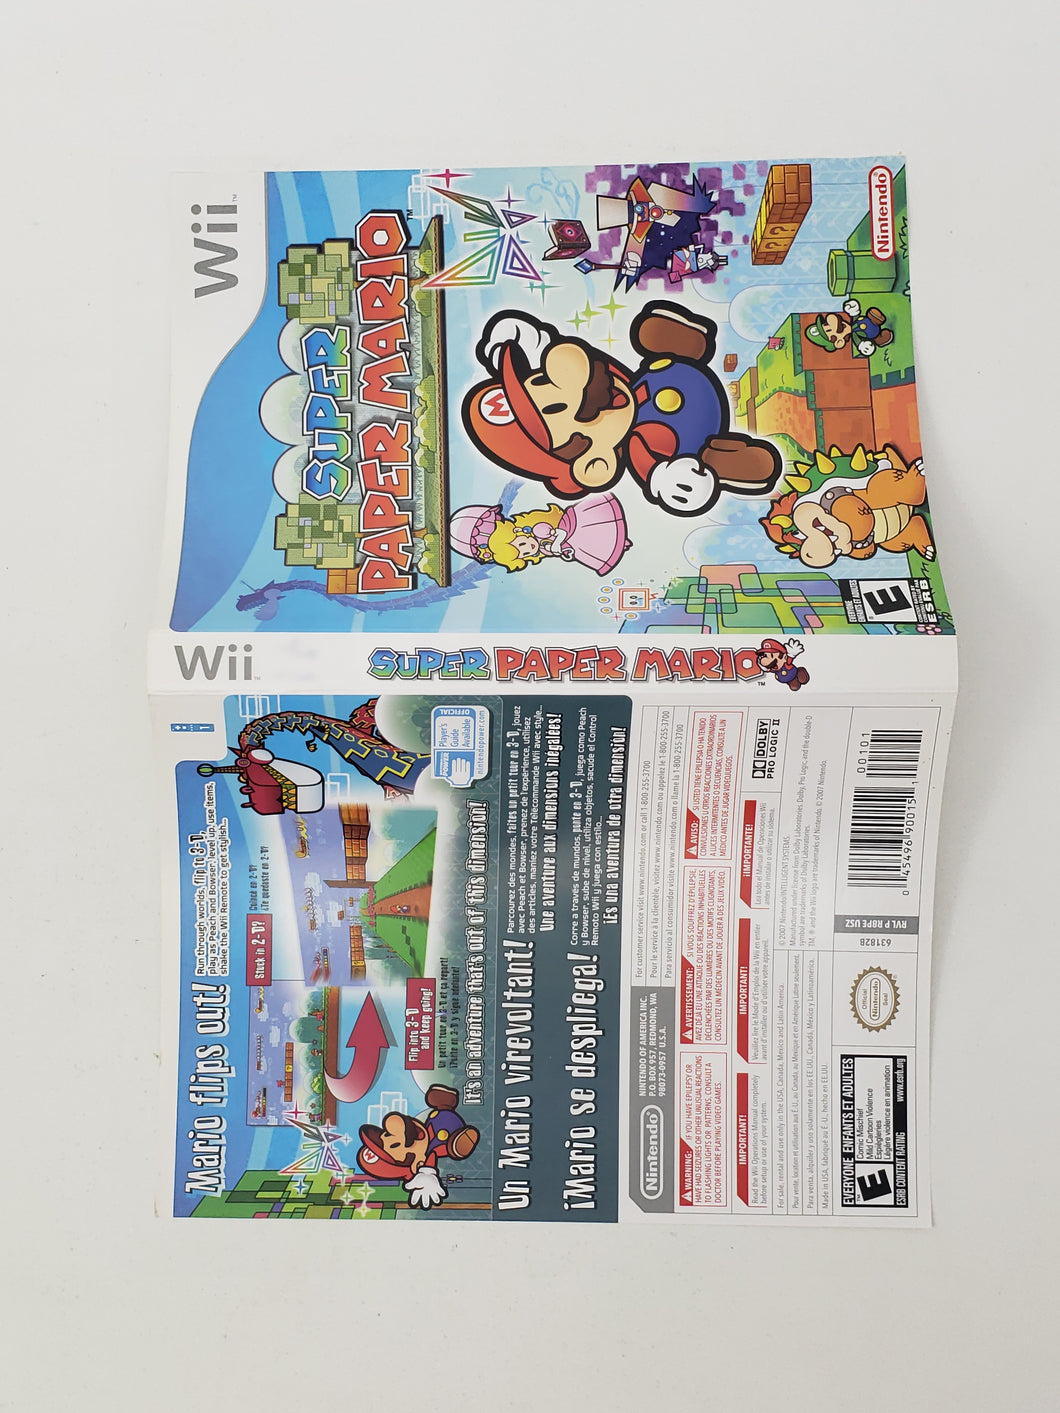 Super Paper Mario [Cover art] - Nintendo Wii